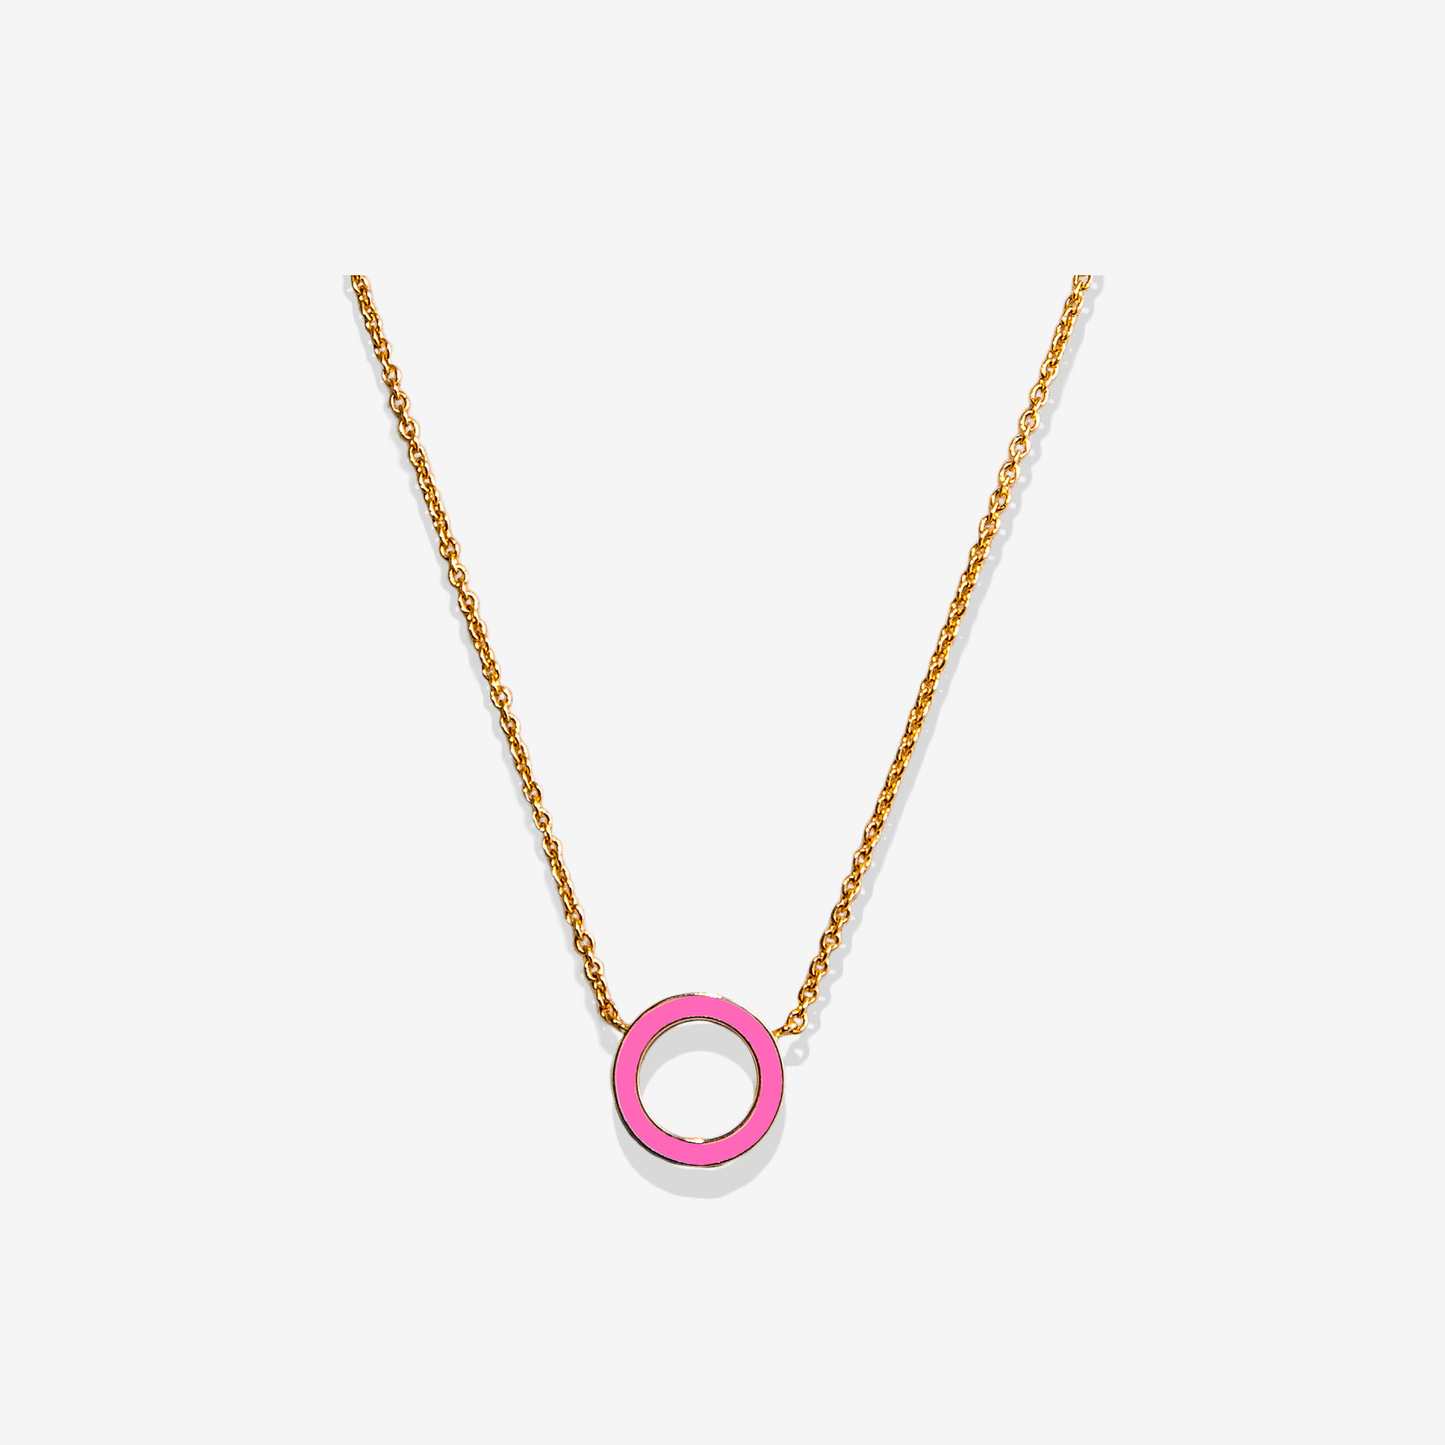 Inside fluo pink necklace